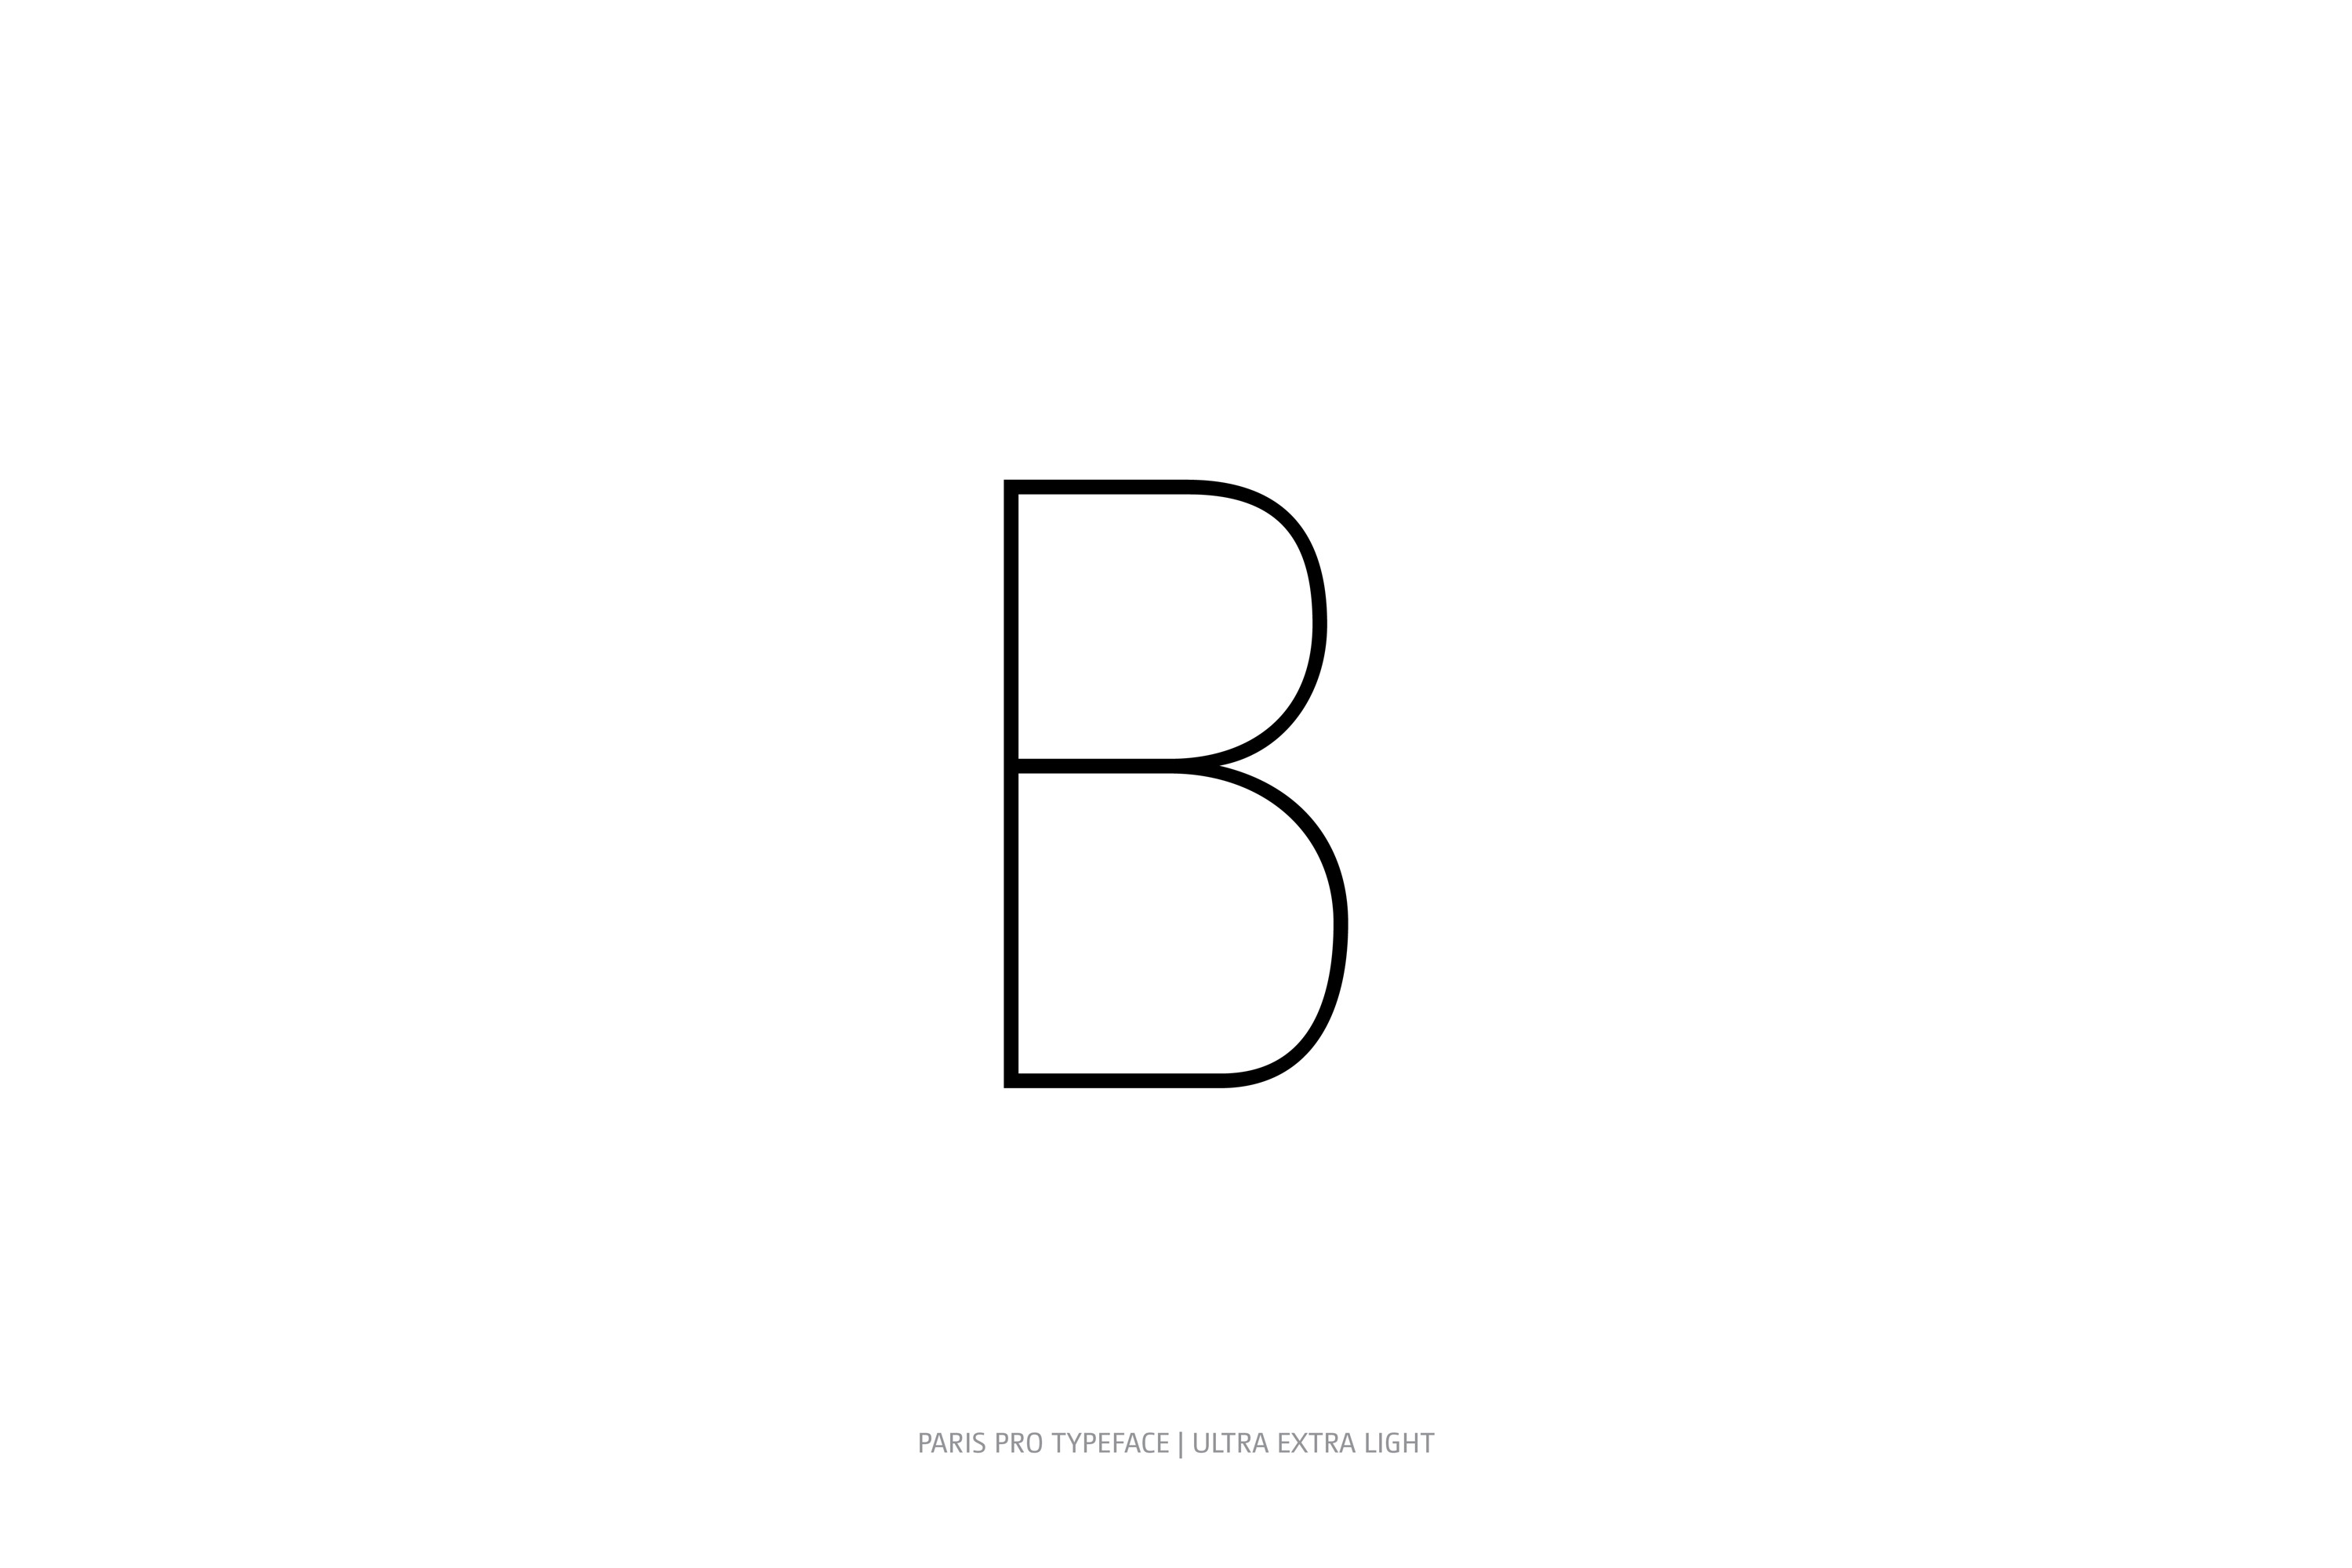 Paris Pro Typeface Ultra Extra Light Style B